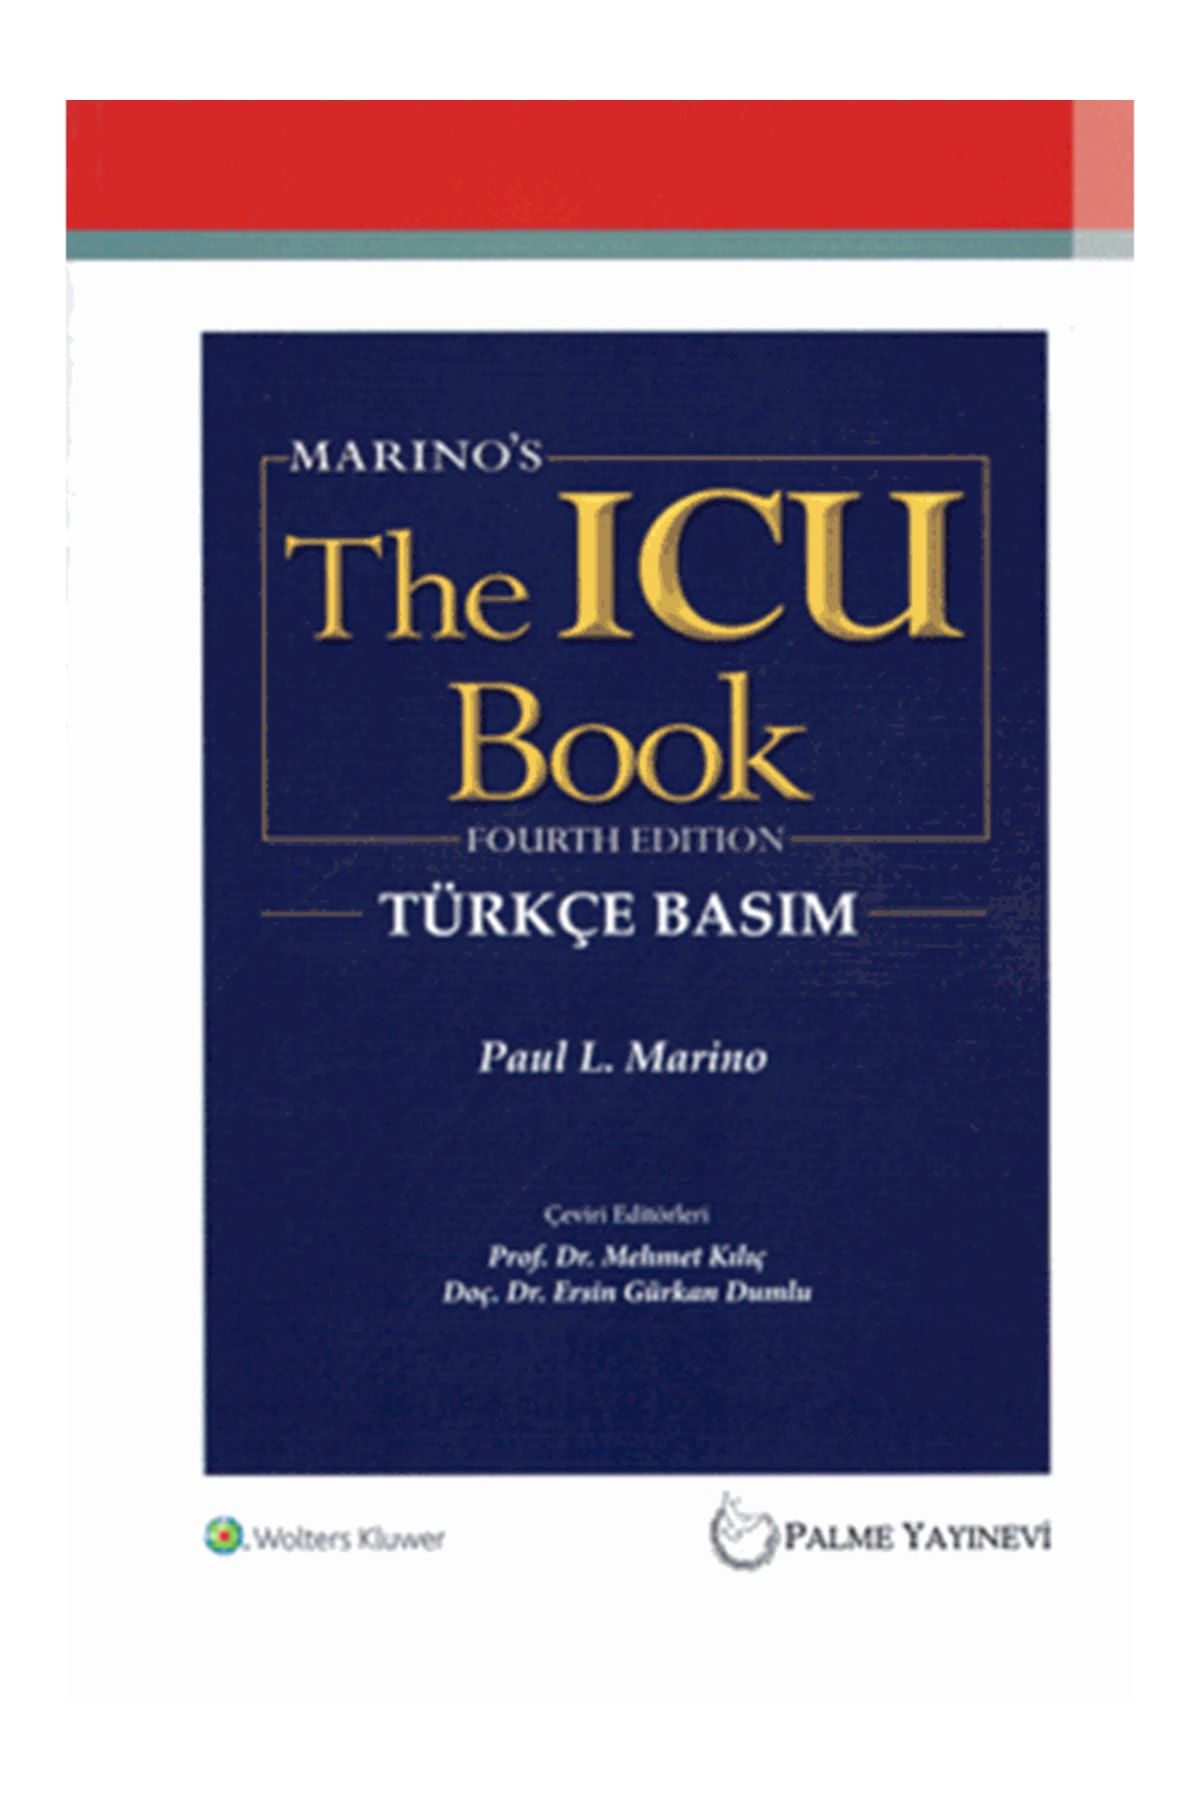 Palme Yayınevi The Icu Book Third Edition (türkçe)